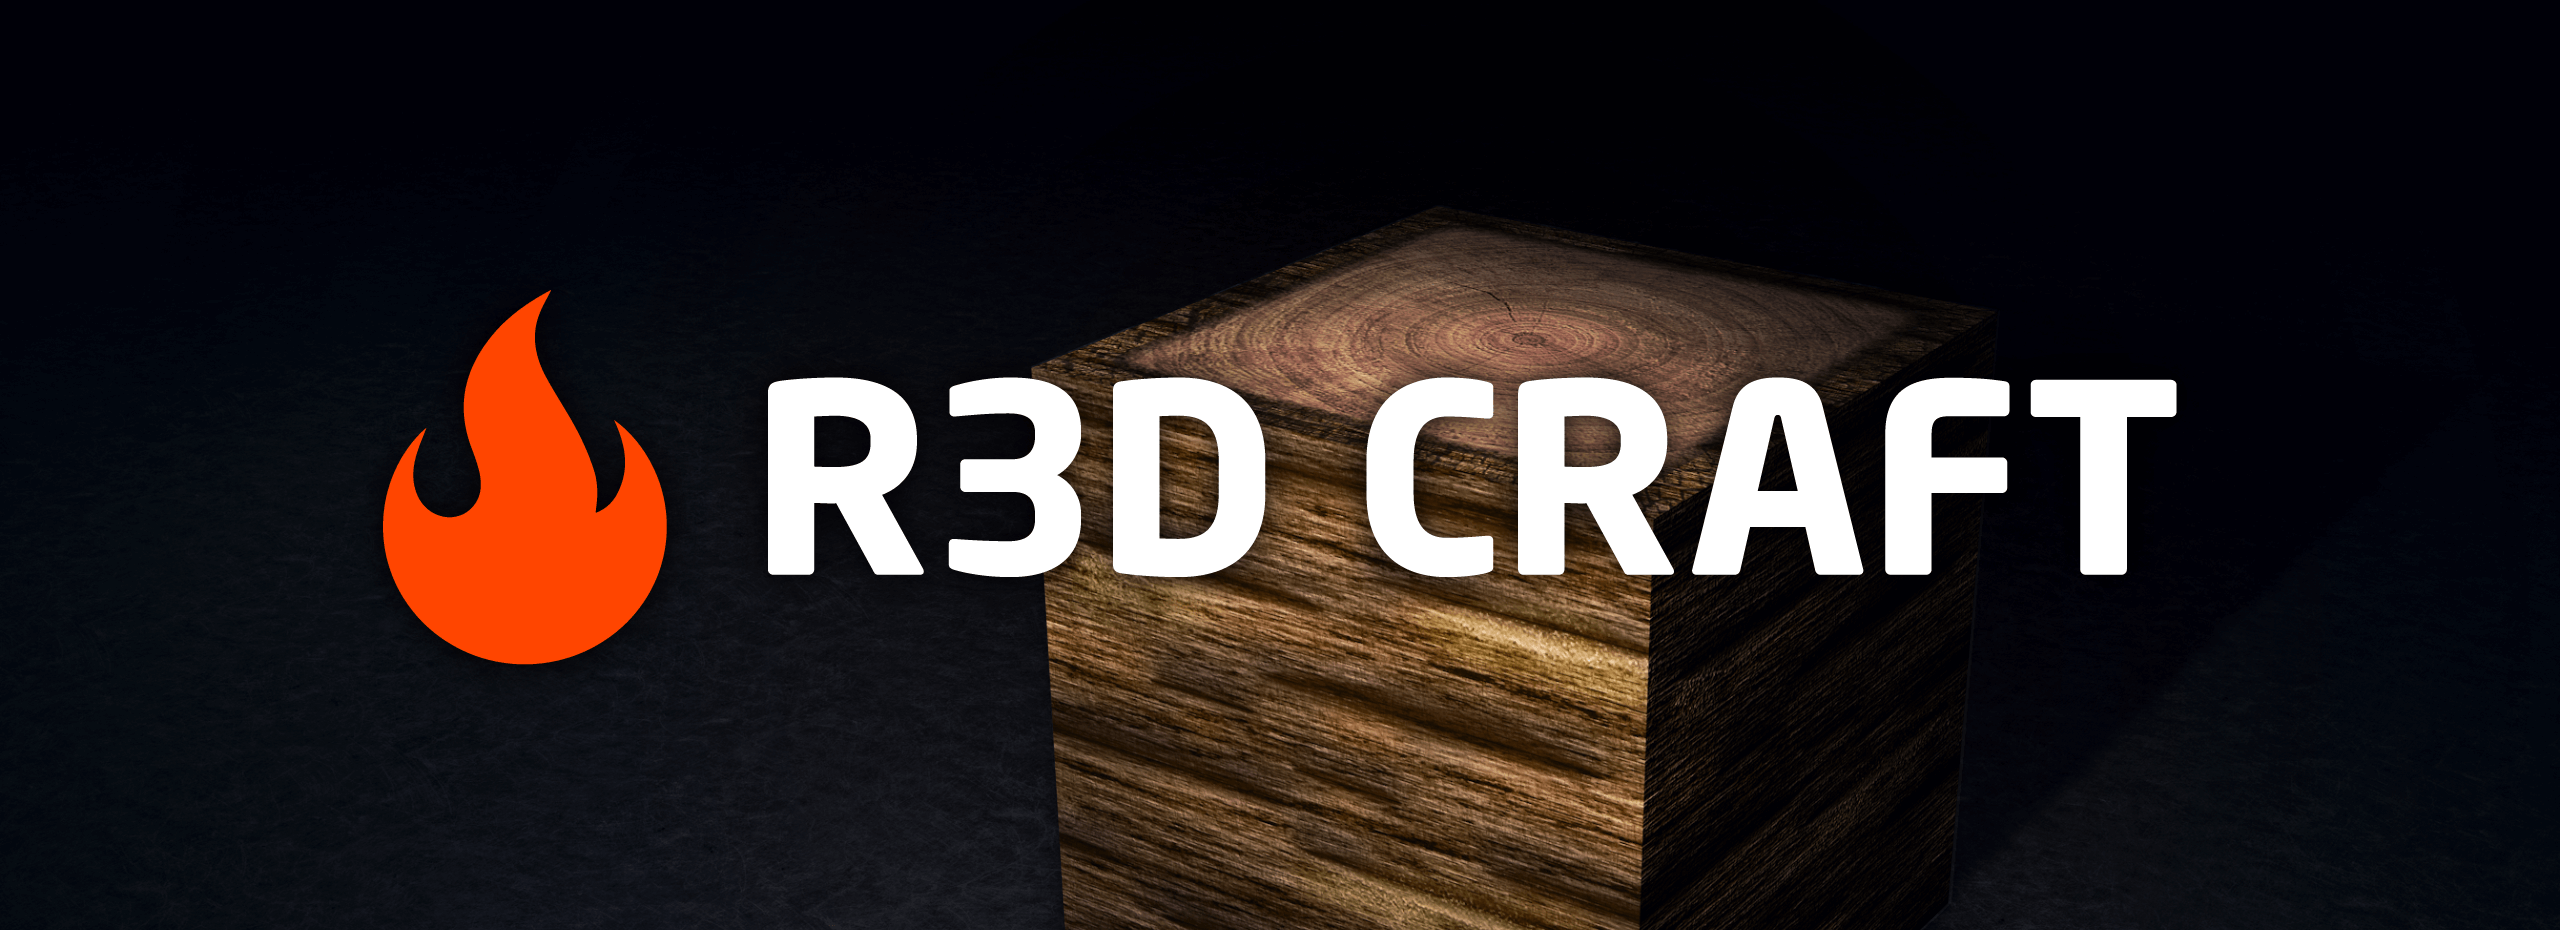 R3D CRAFT скриншот 1